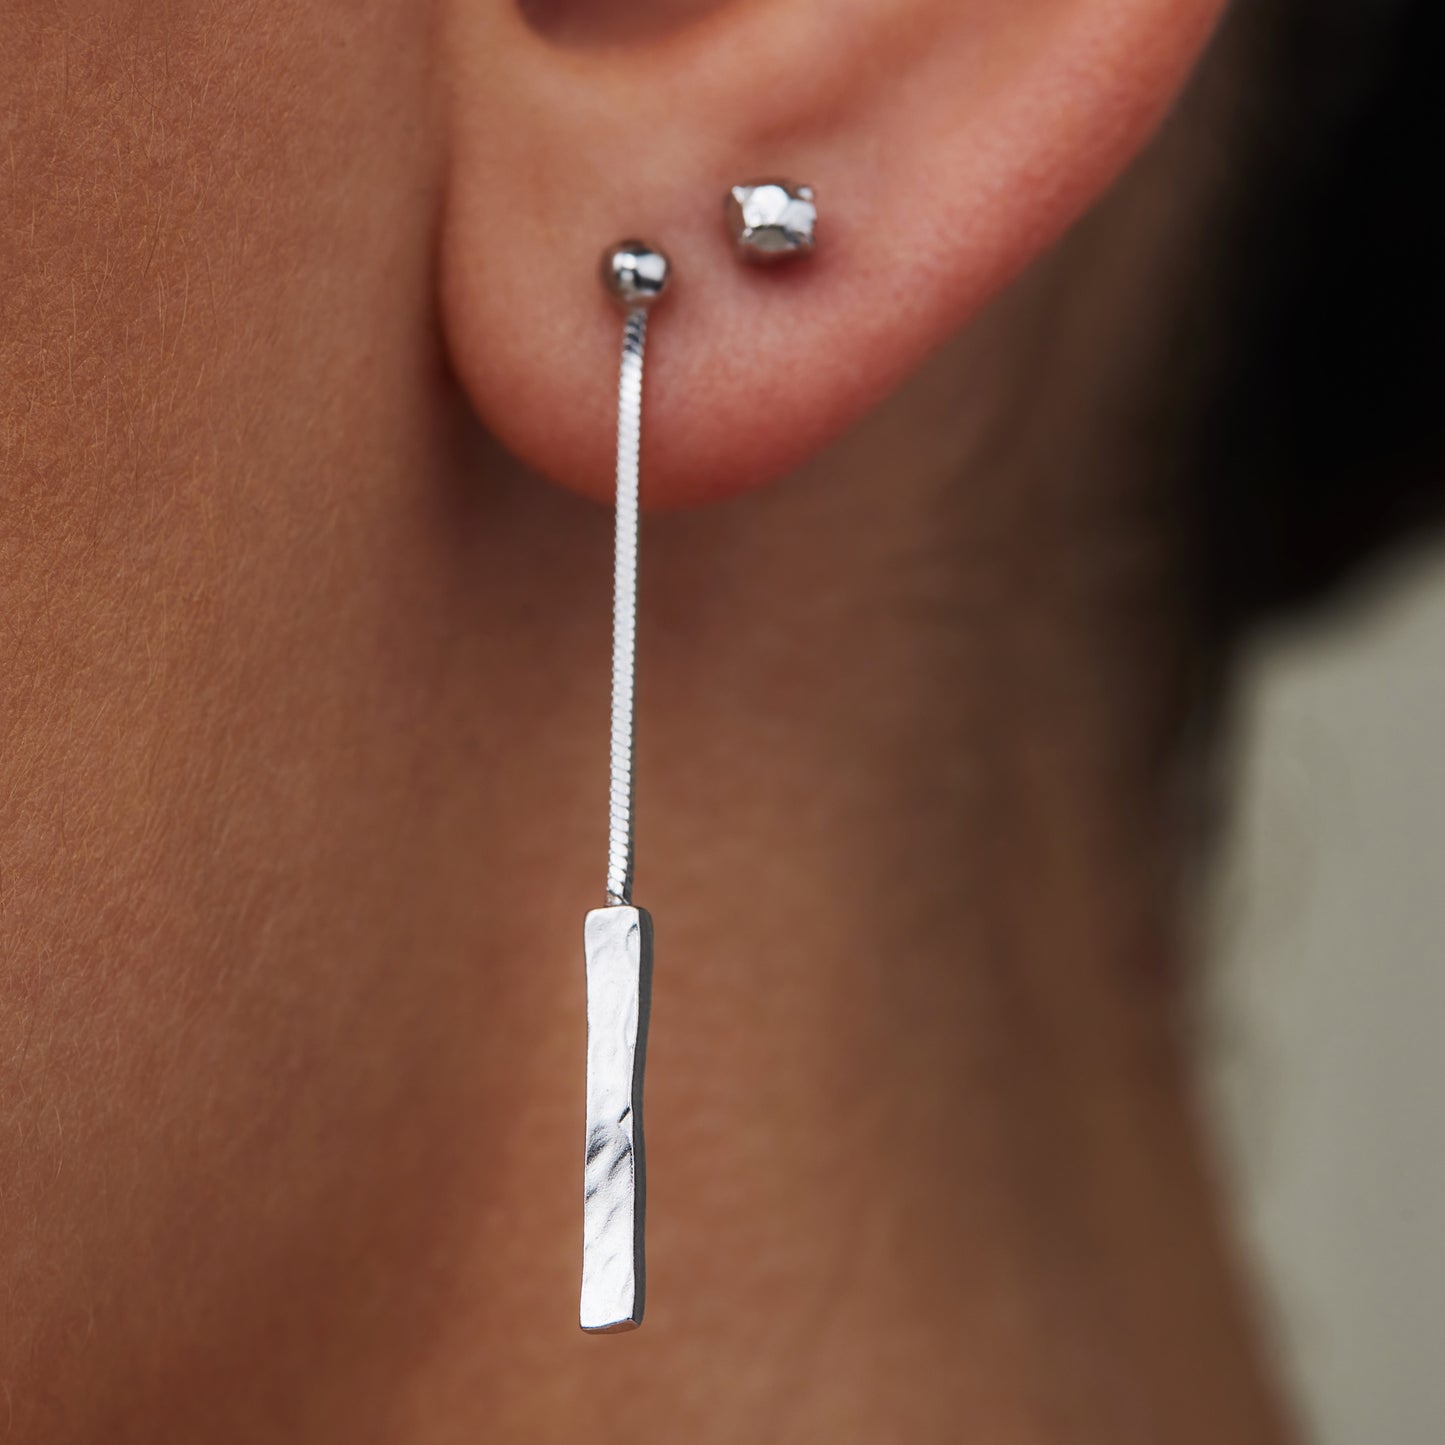 Sisterhood Moonscape 925 sterling silver drop earrings with rods